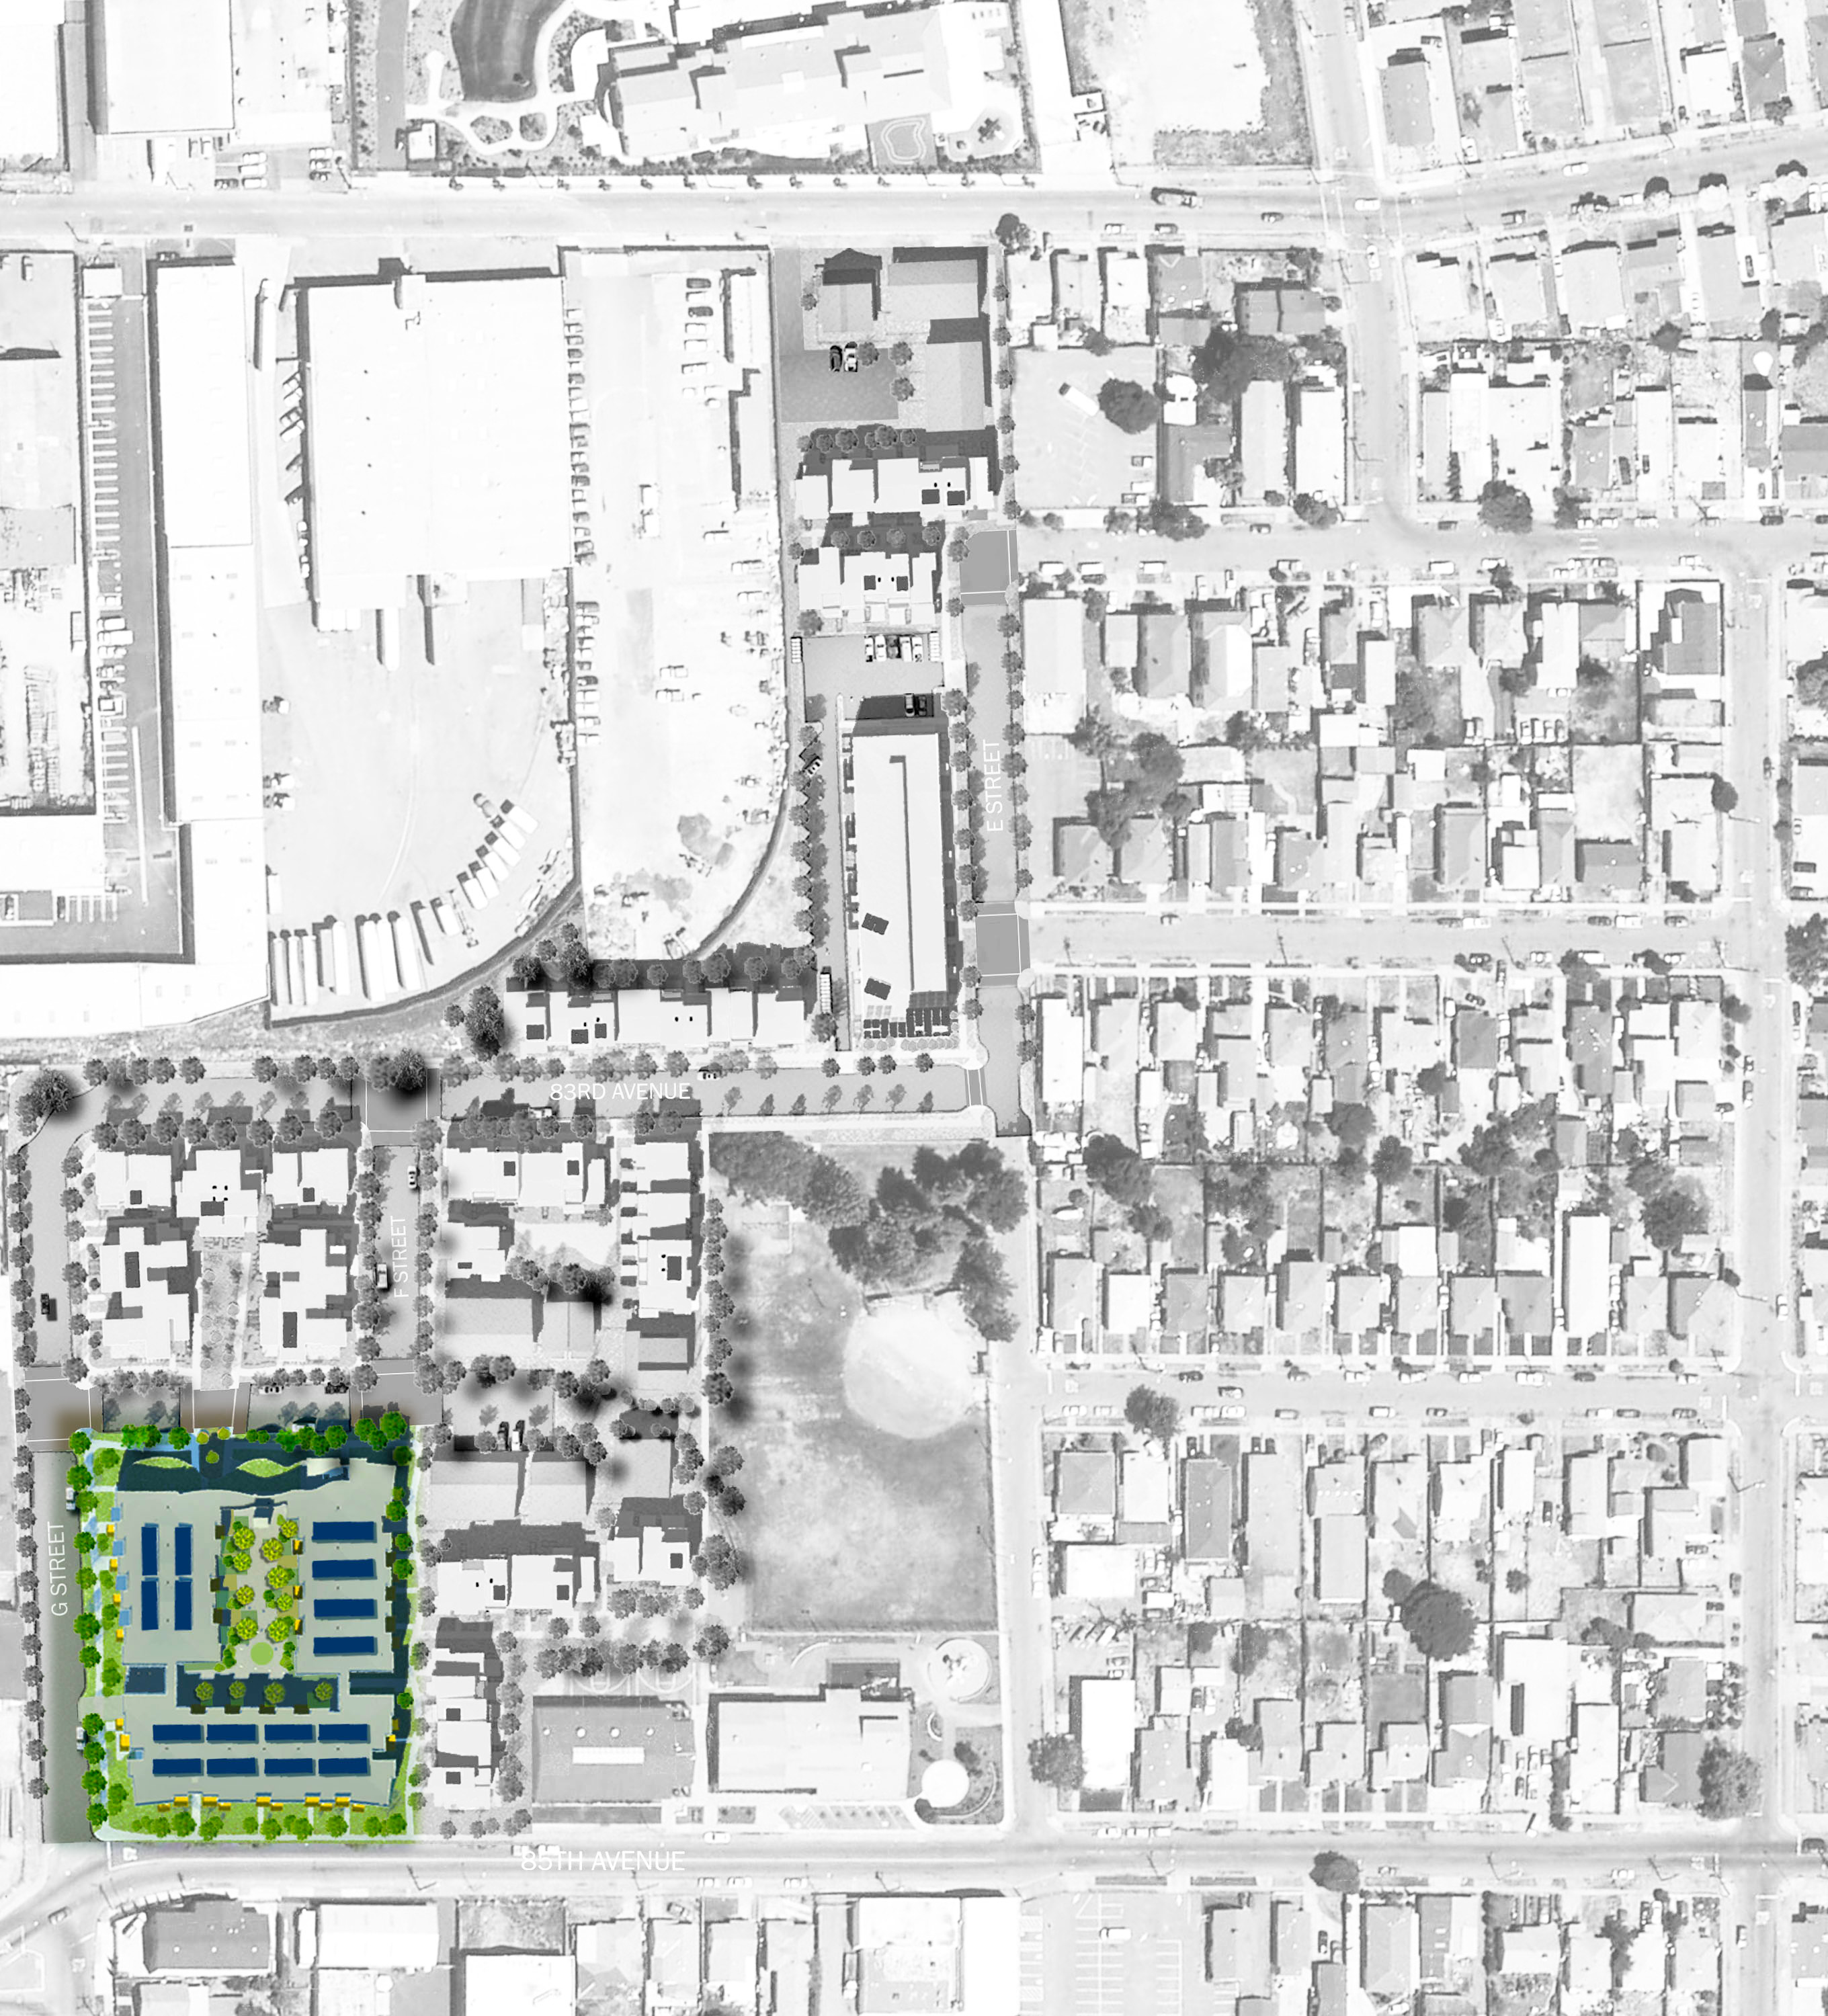 Site plan highlighting the family rental apartment building for Tassafaronga Village in East Oakland, CA. 